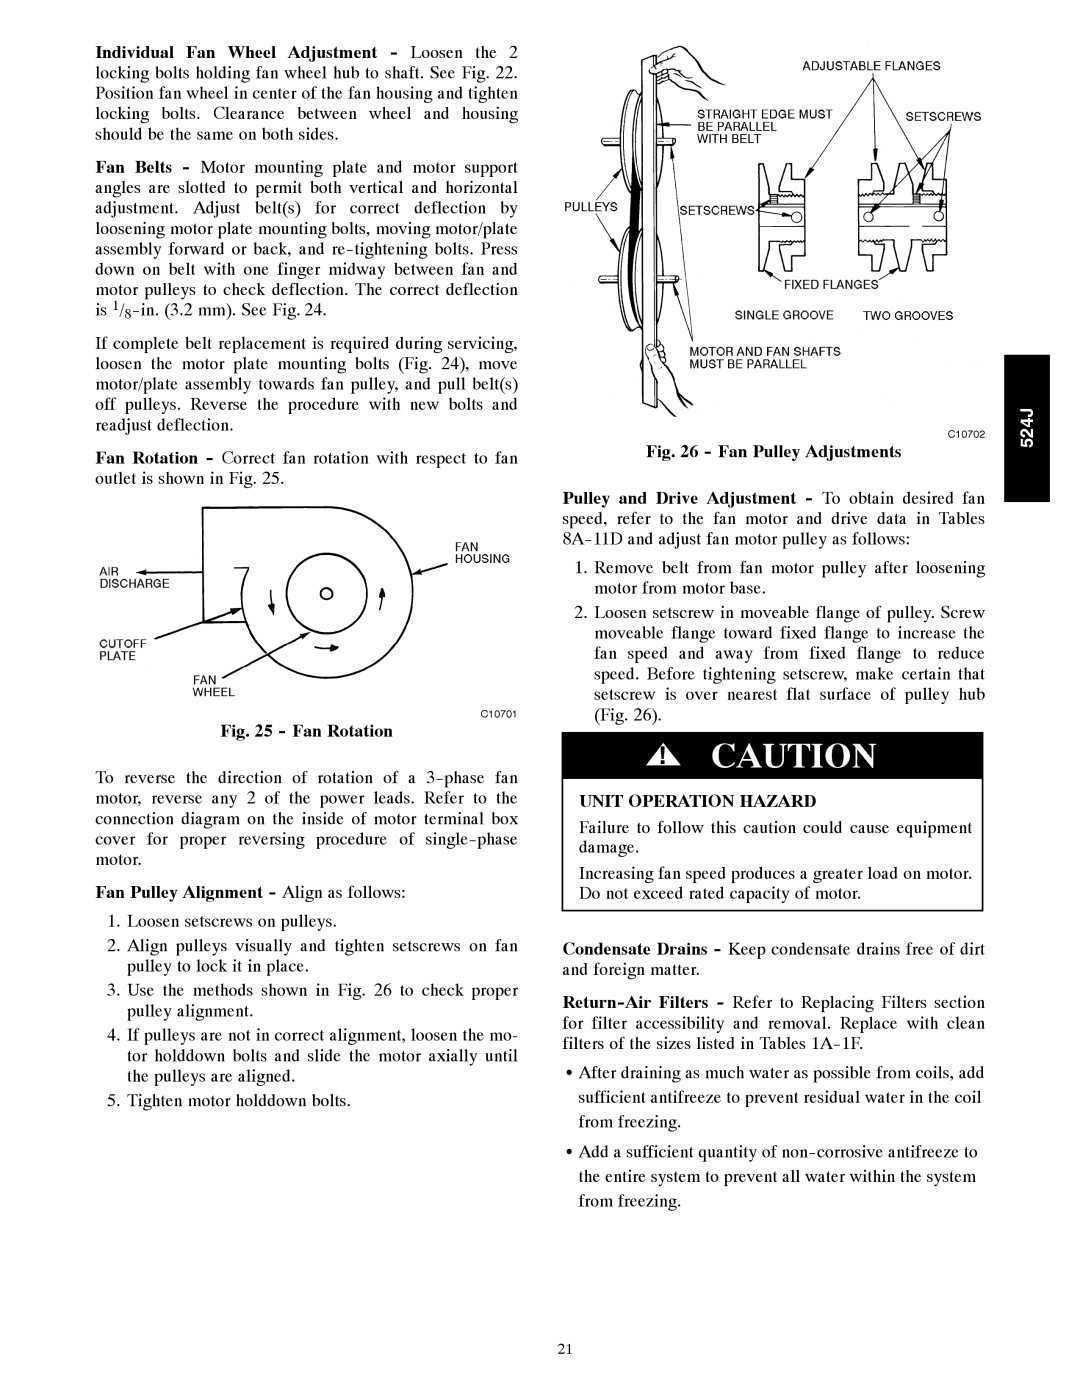 Bryant 524J manual Fan Rotation, Fan Pulley Alignment - Align as follows, Fan Pulley Adjustments, Unit Operation Hazard 